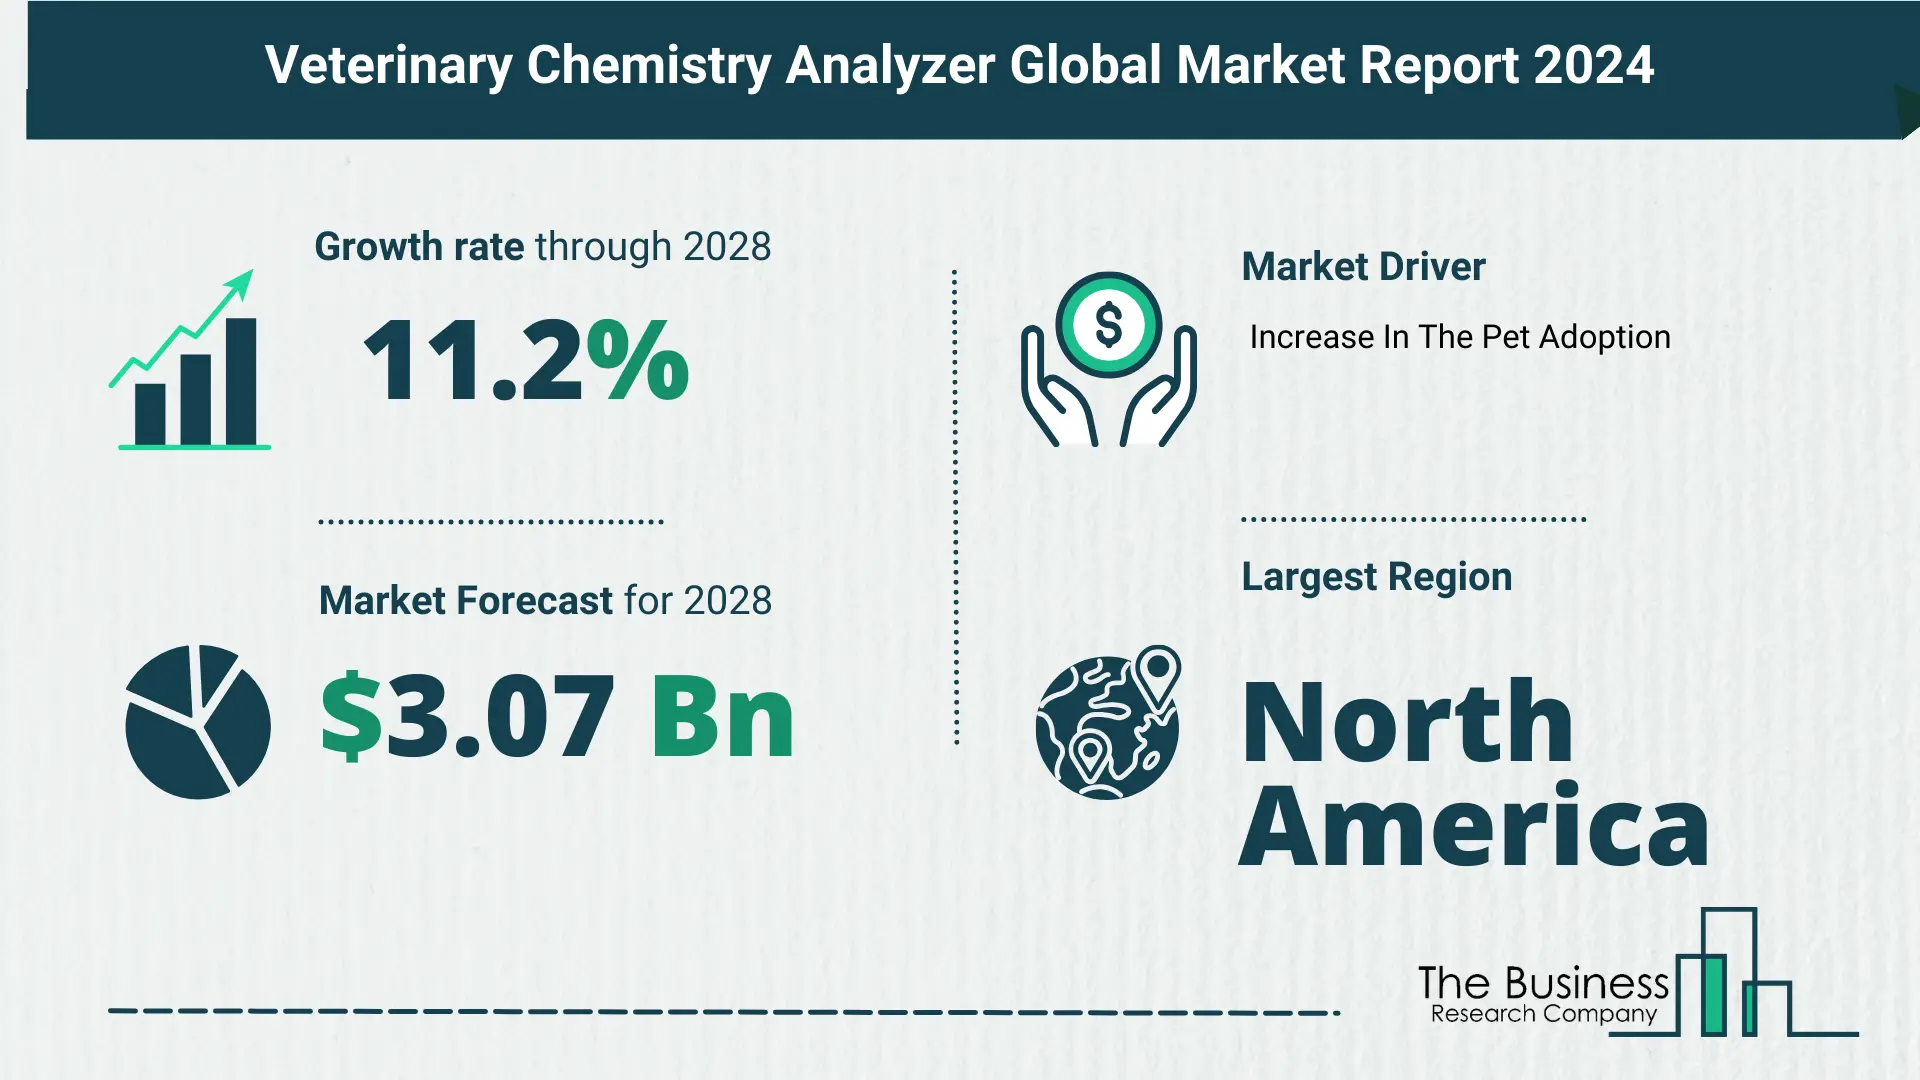 Global Veterinary Chemistry Analyzer Market Analysis 2024: Size, Share, And Key Trends